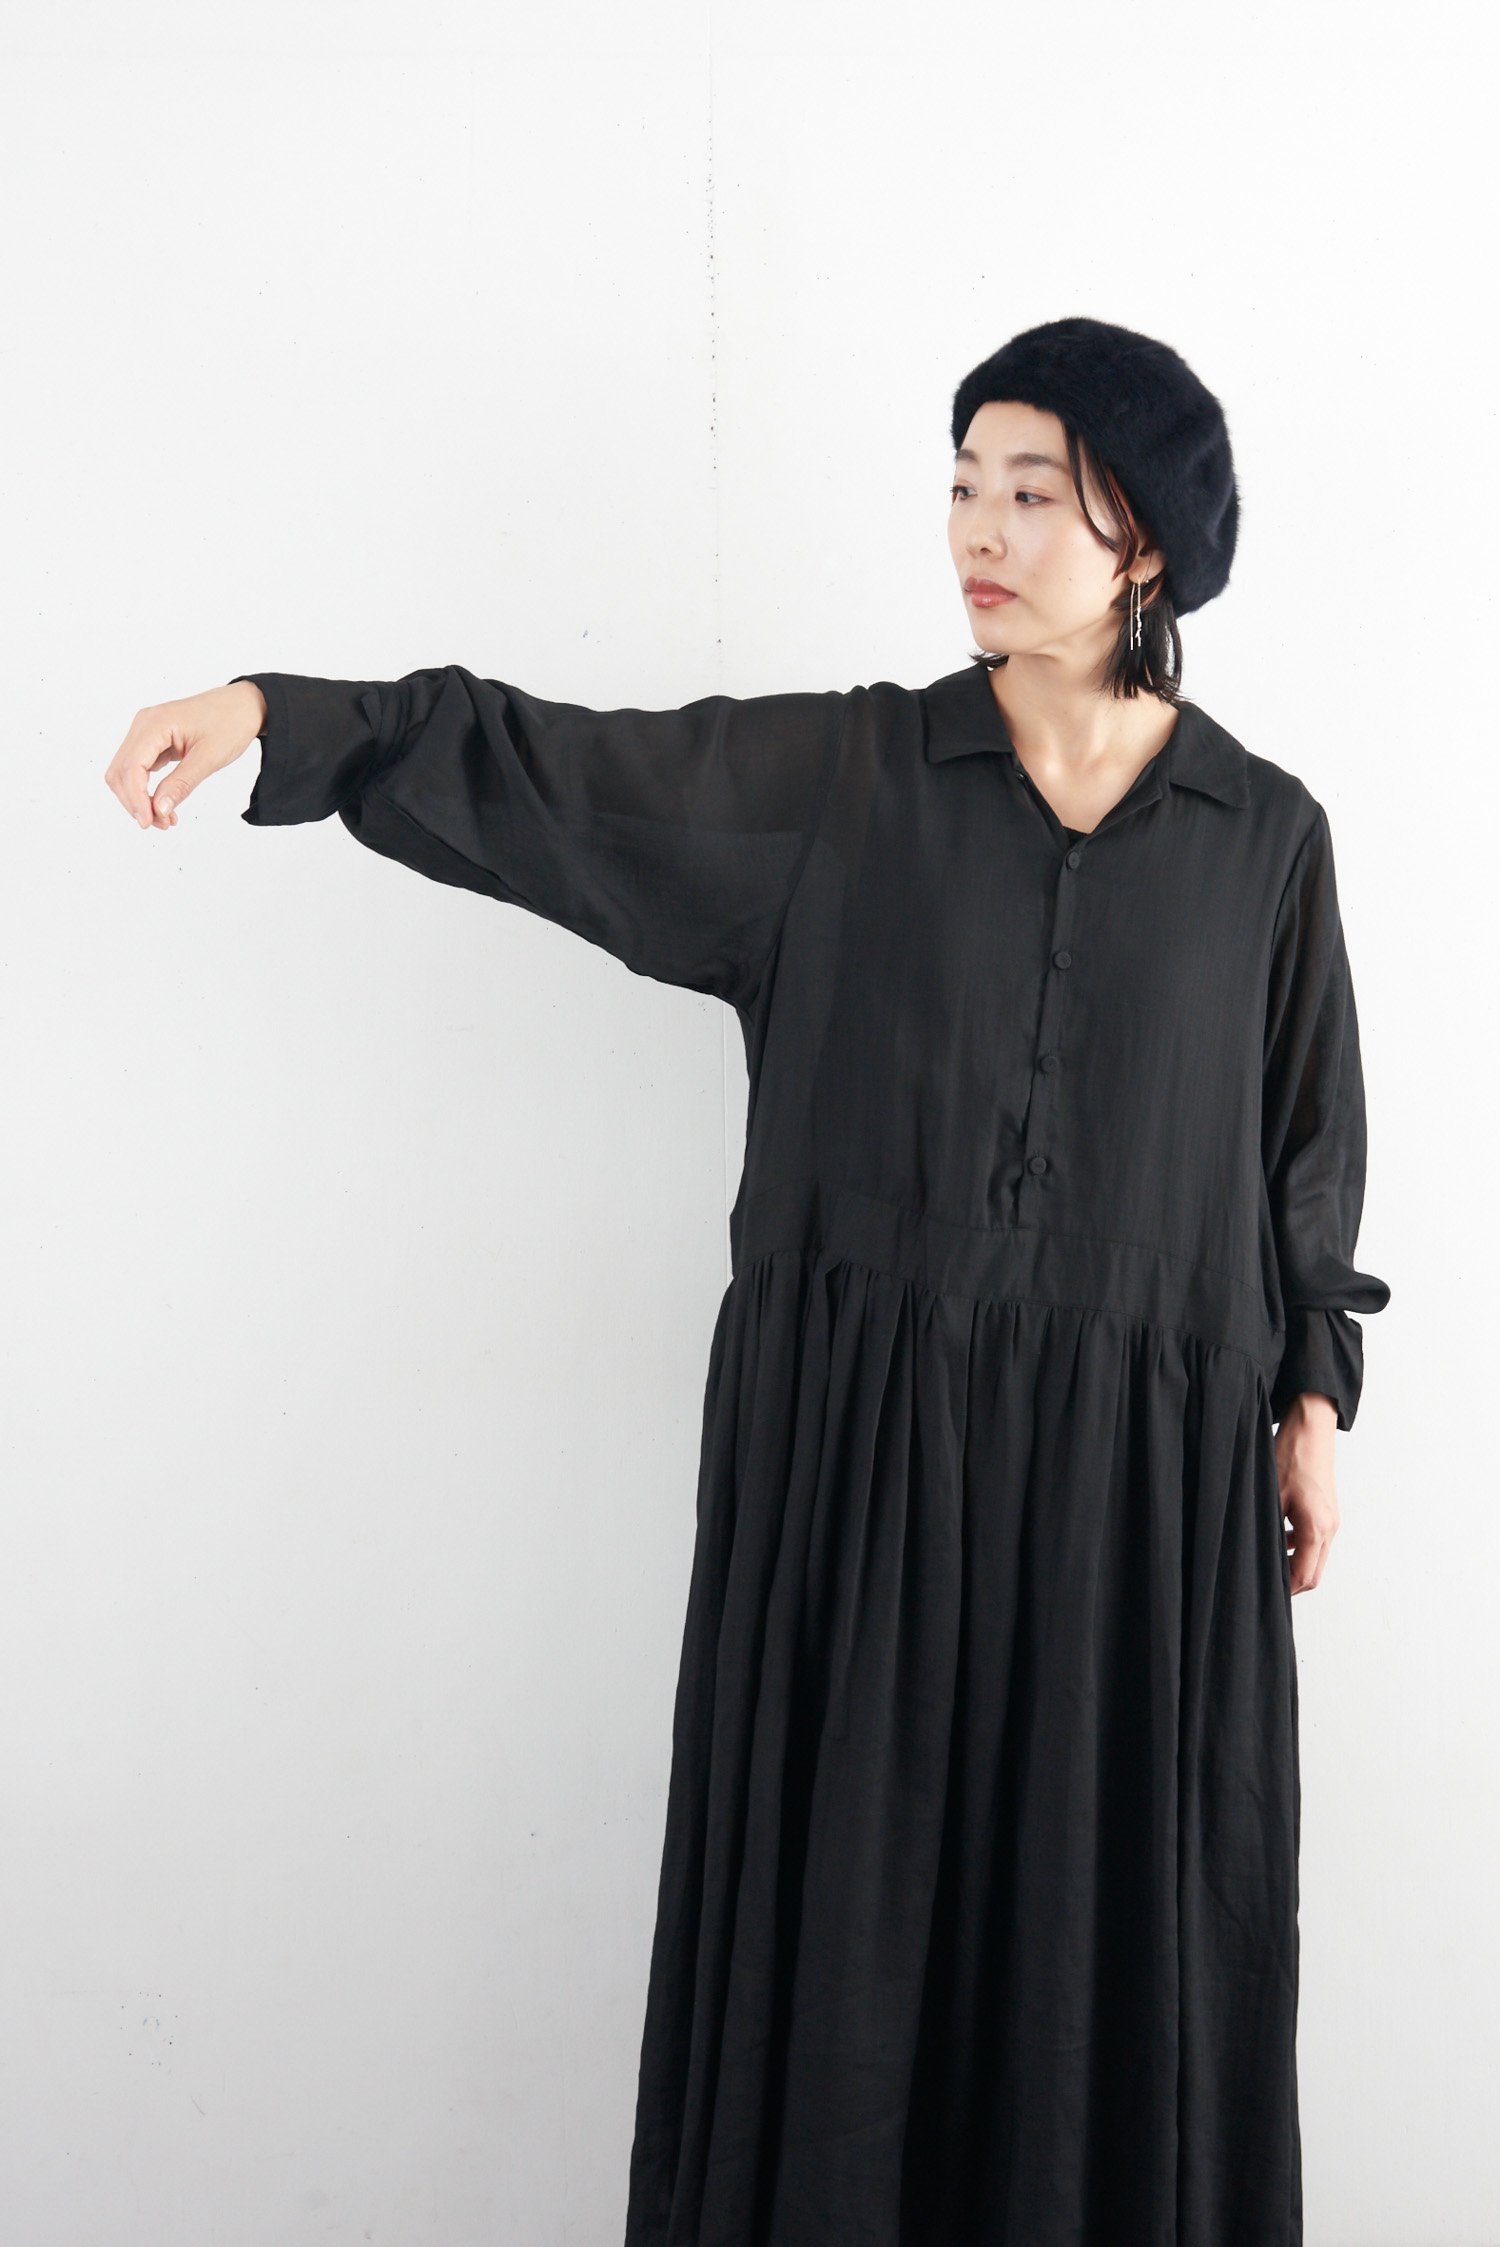 vlas blomme Black dress カバードレス - poooL (online shop)